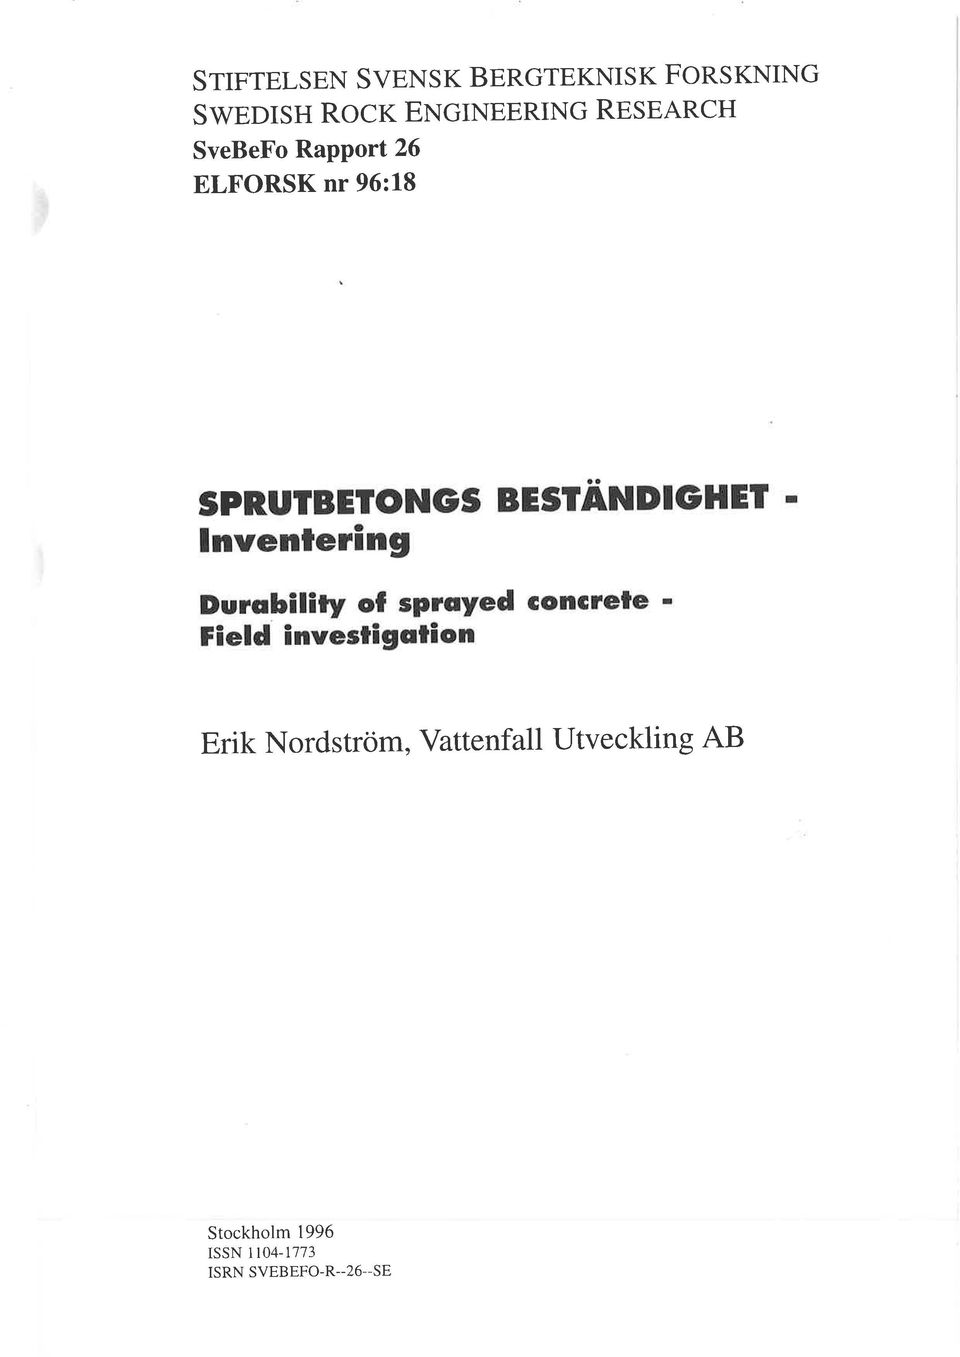 Durab l ry of sproyed concrele ' Field investigction Erik Nordström,